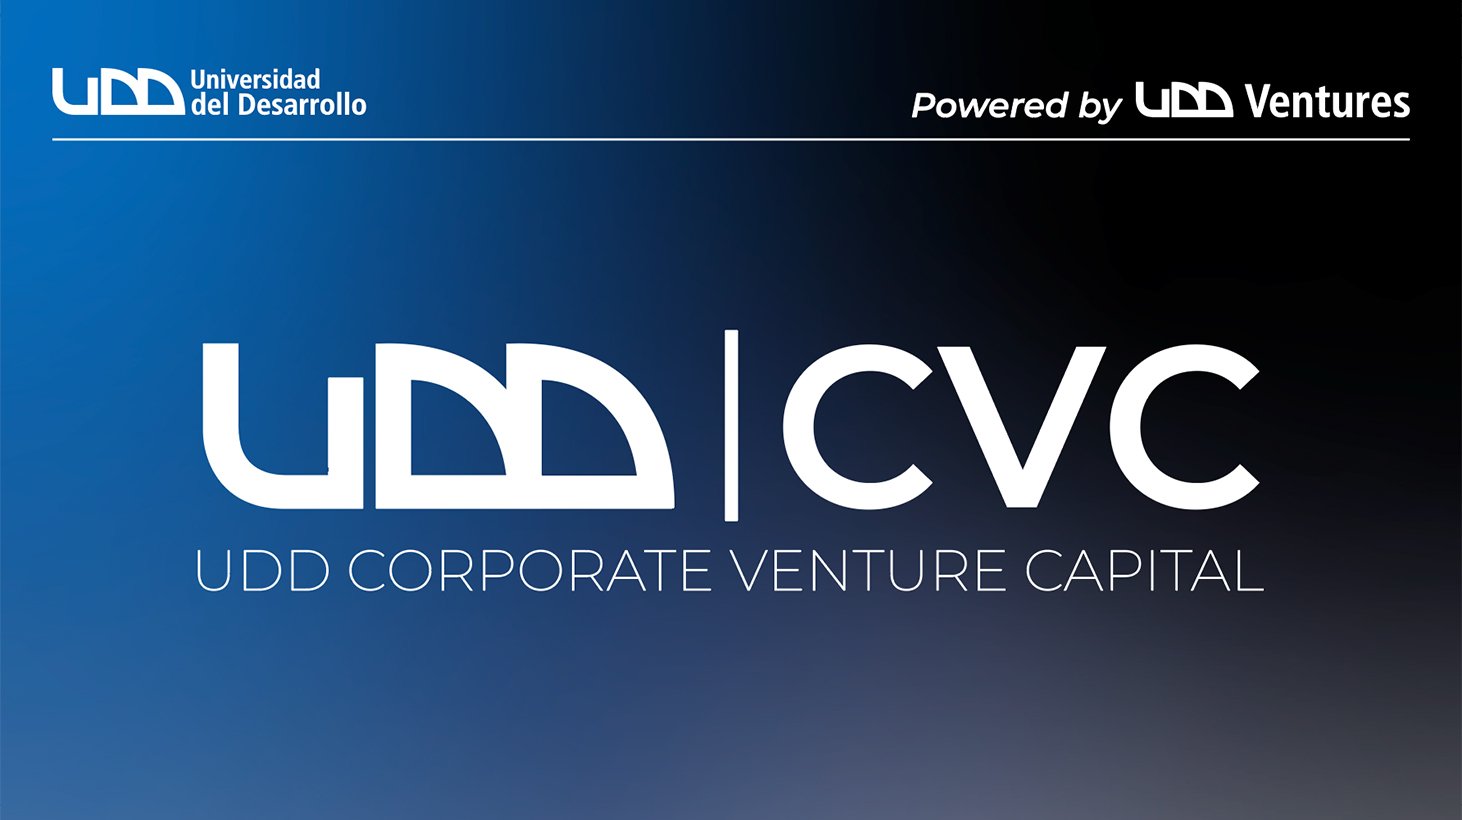 UDD y UDD Ventures lanzan la red UDD Corporate Venture Capital.